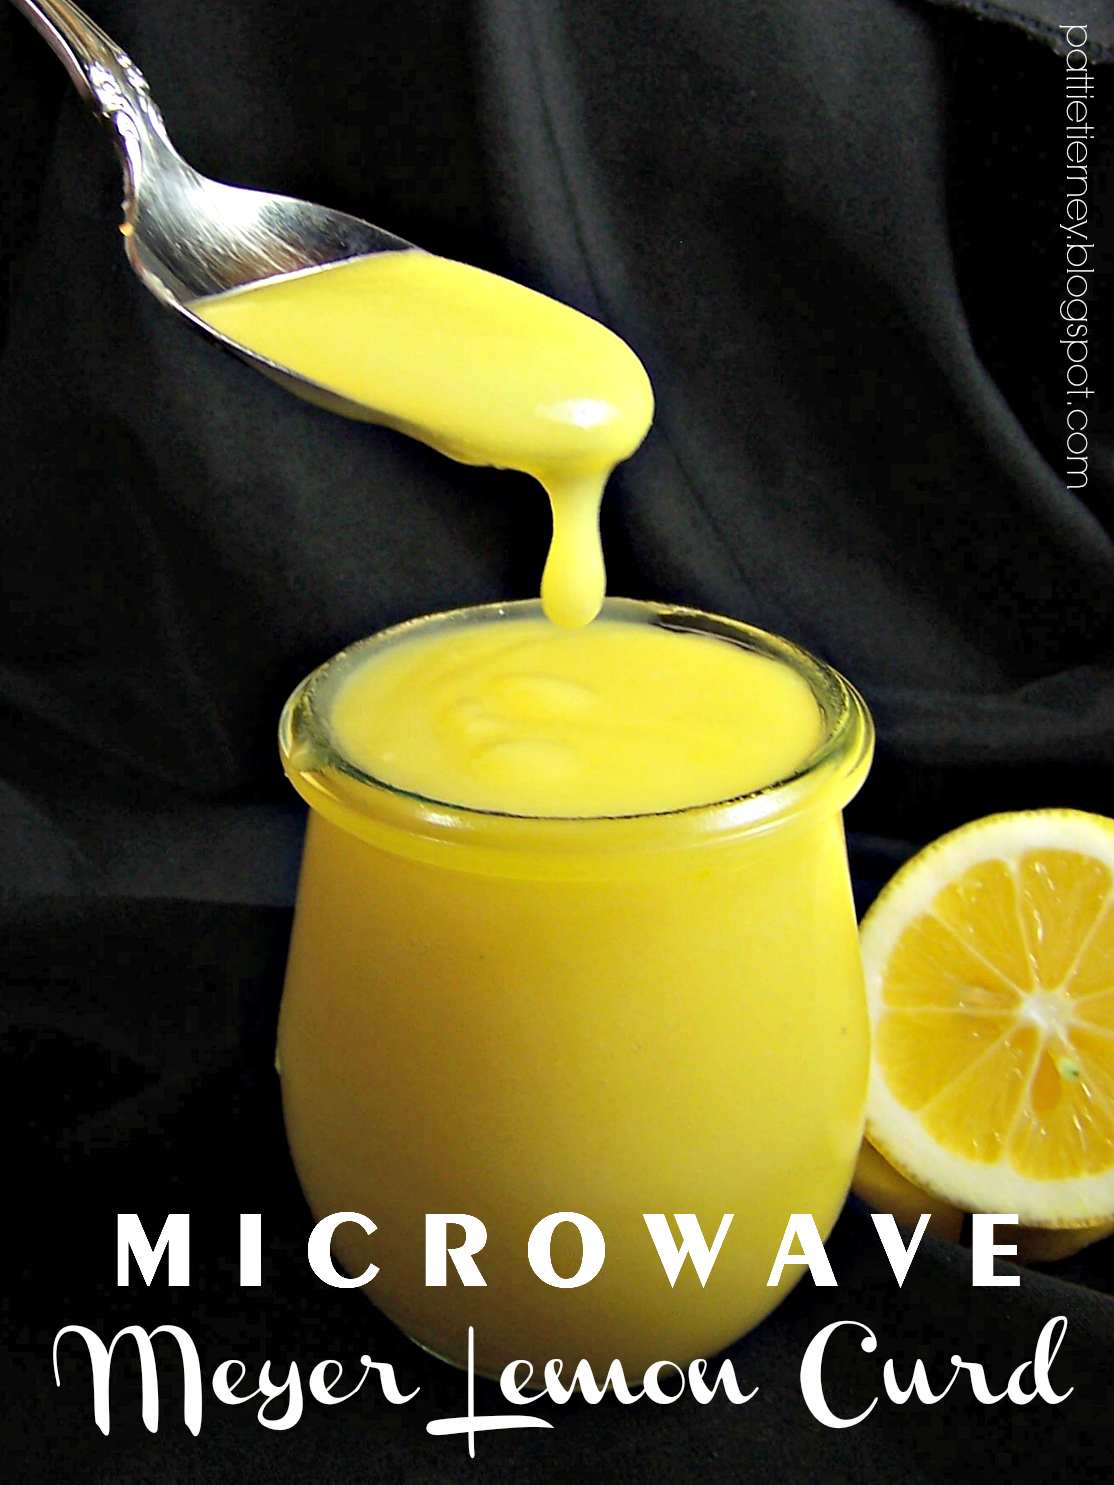 Olla-Podrida: Microwave Meyer Lemon Curd